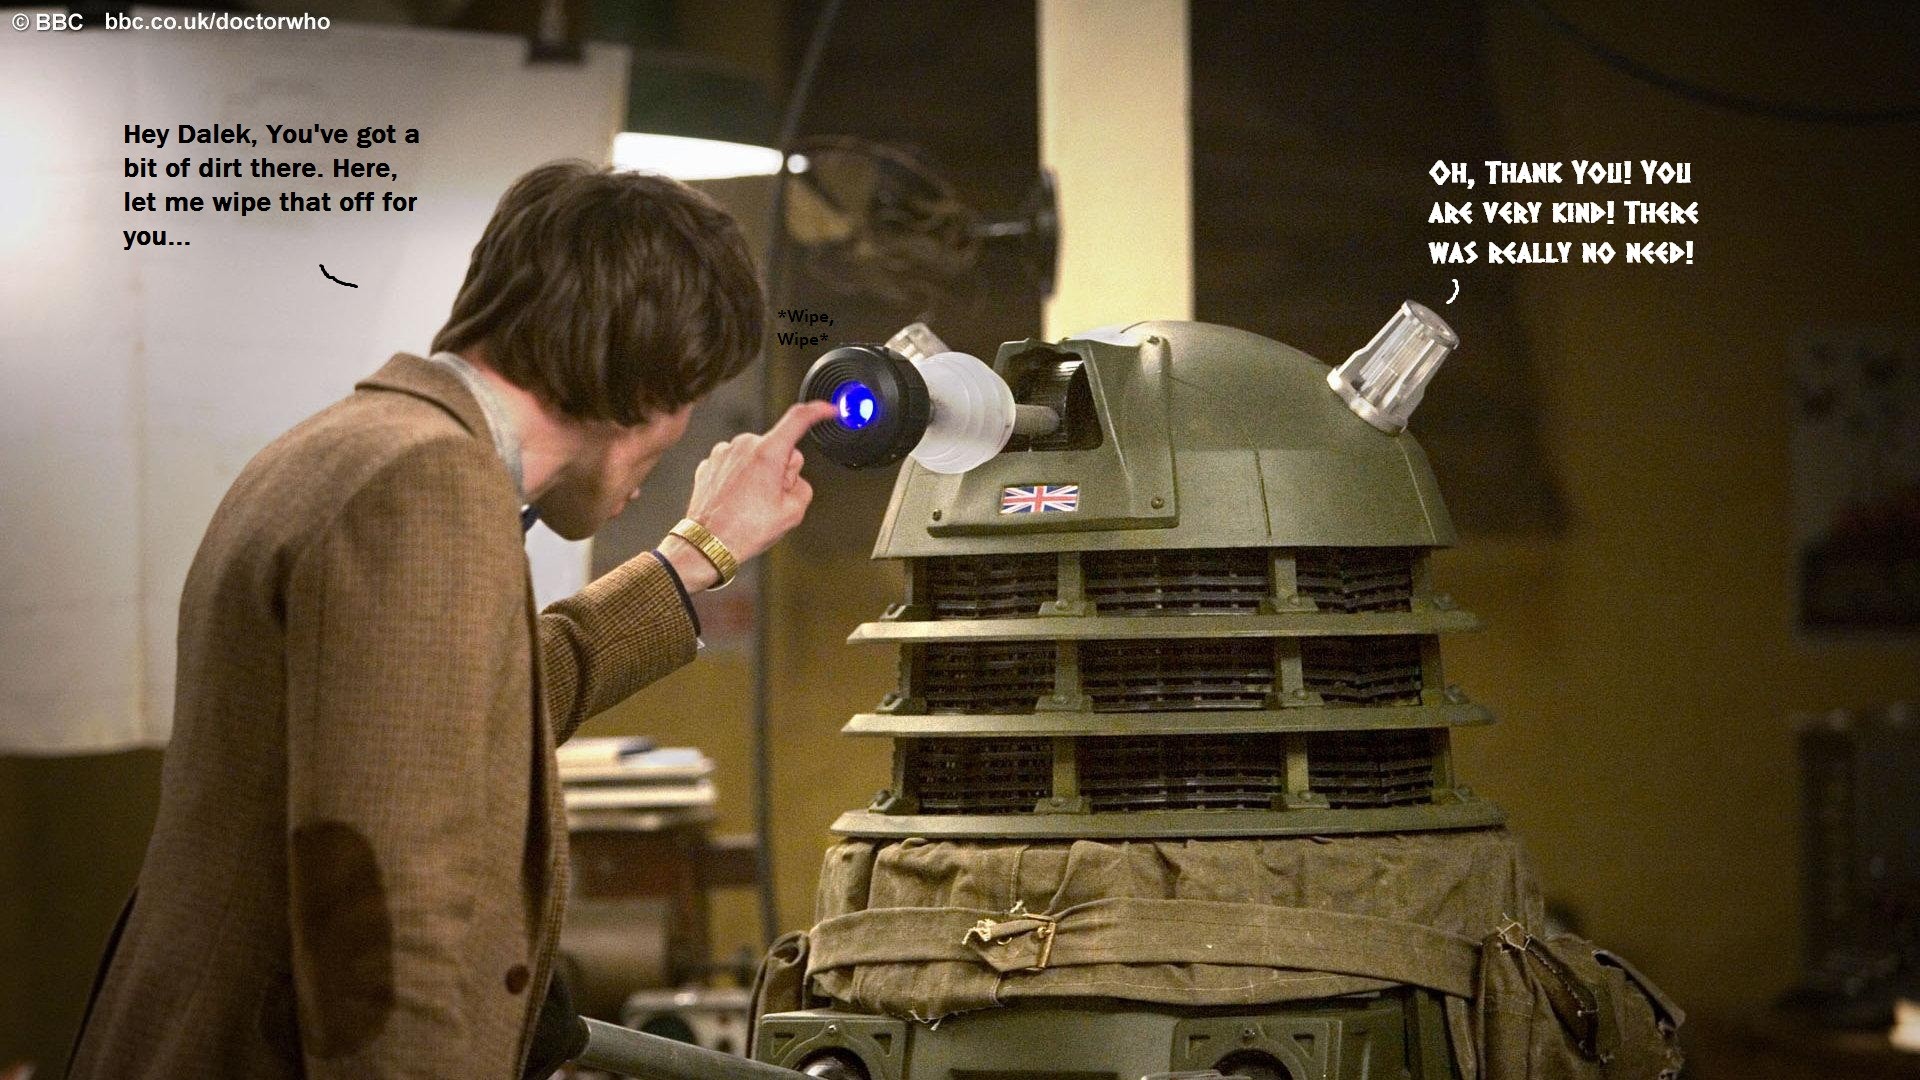 1920x1080 ... Be Kind To Daleks by ironsidemeeper